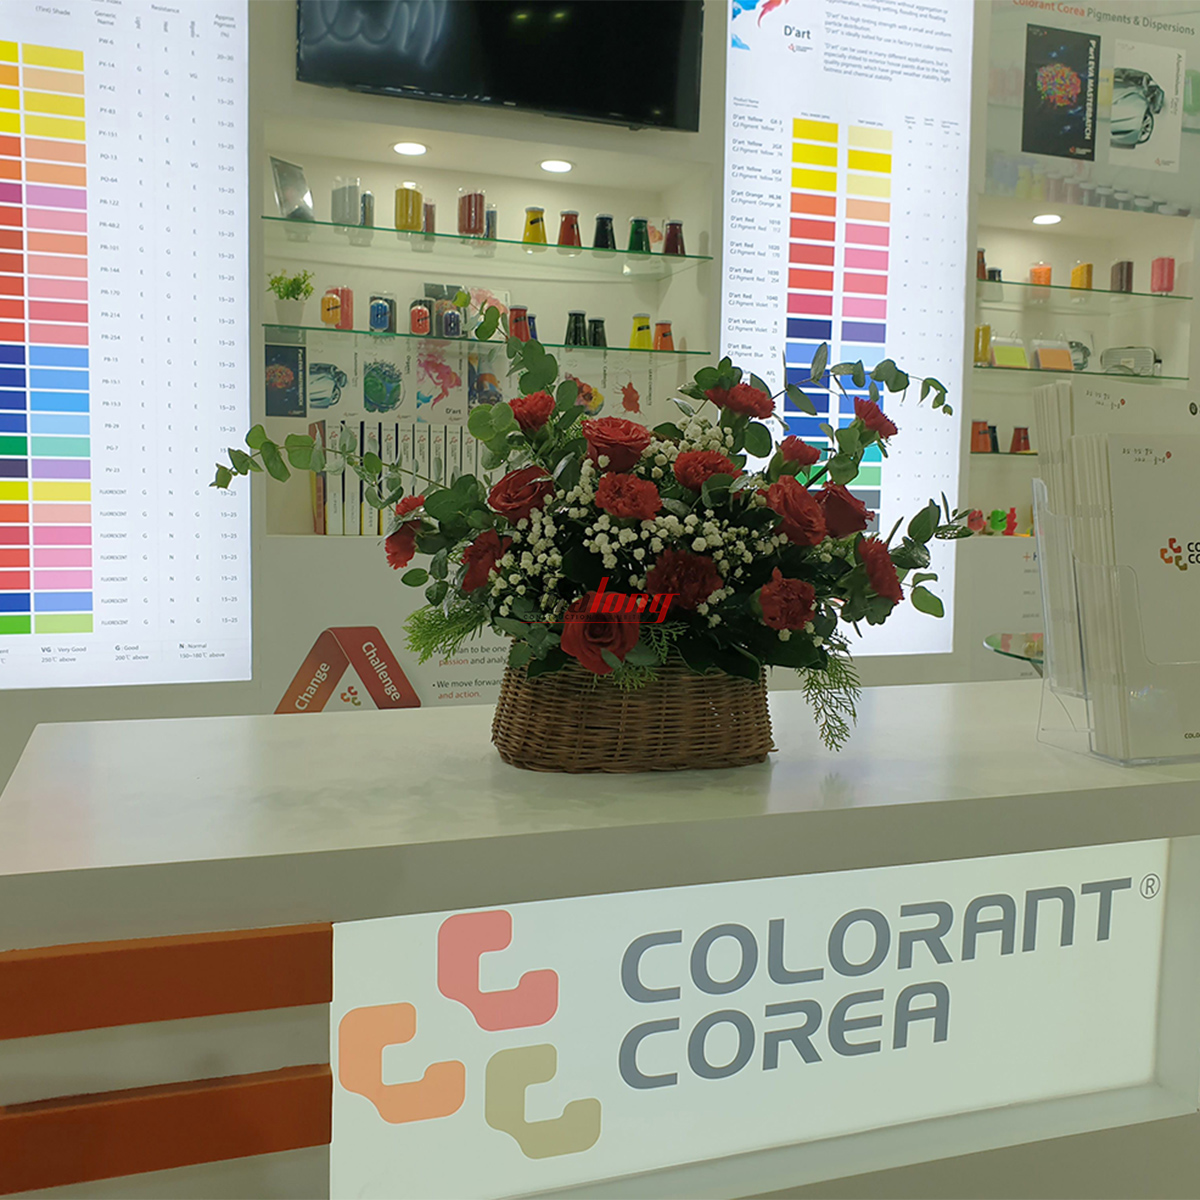 Thiết kế thi công gian hàng Colorant Corea được thực hiện bởi Gia Long - Colorant Corea booth design and construction is done by Gia Long